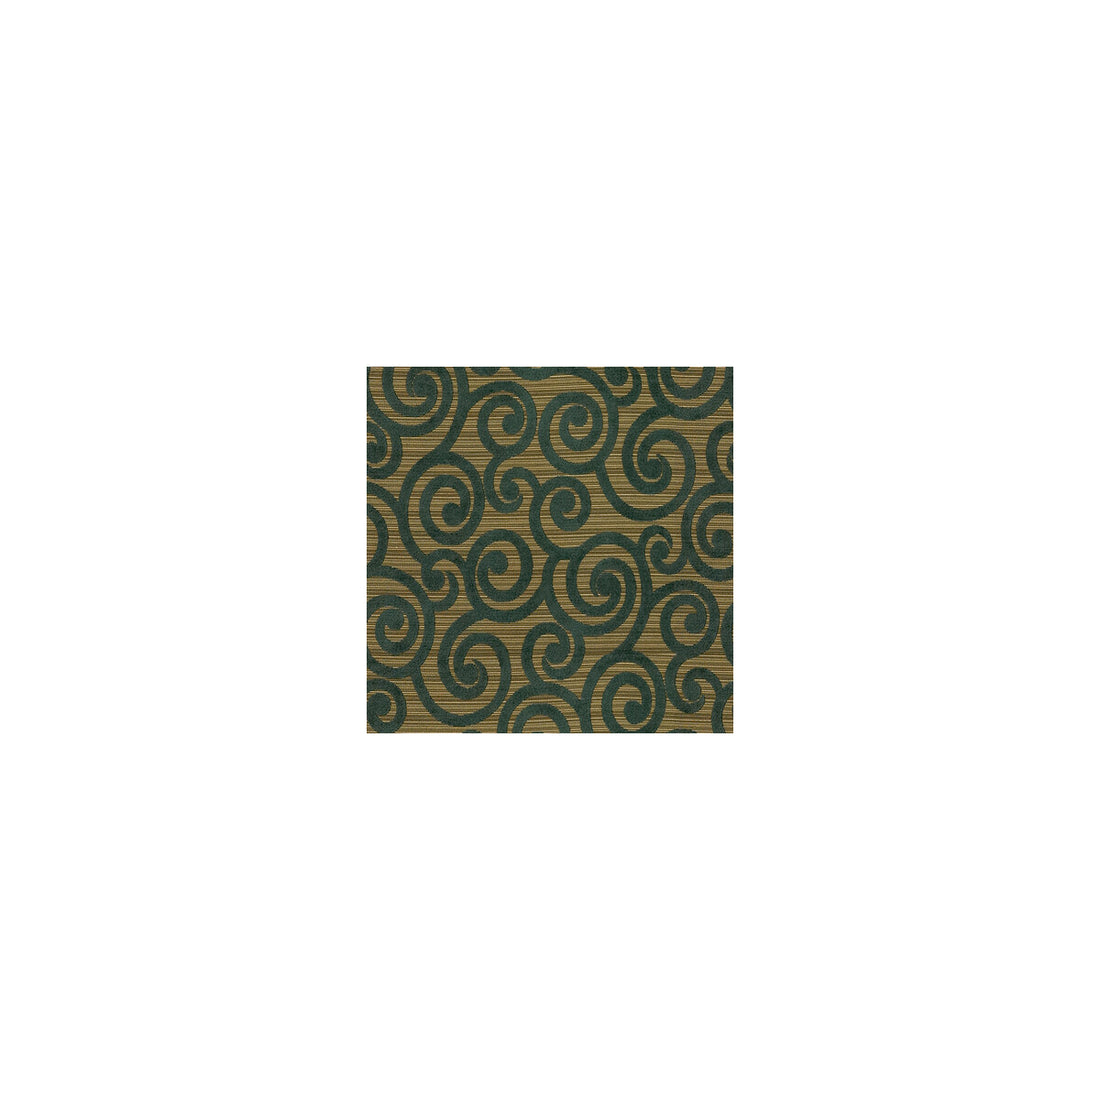 Oneida fabric in lagoon color - pattern 30134.516.0 - by Kravet Basics